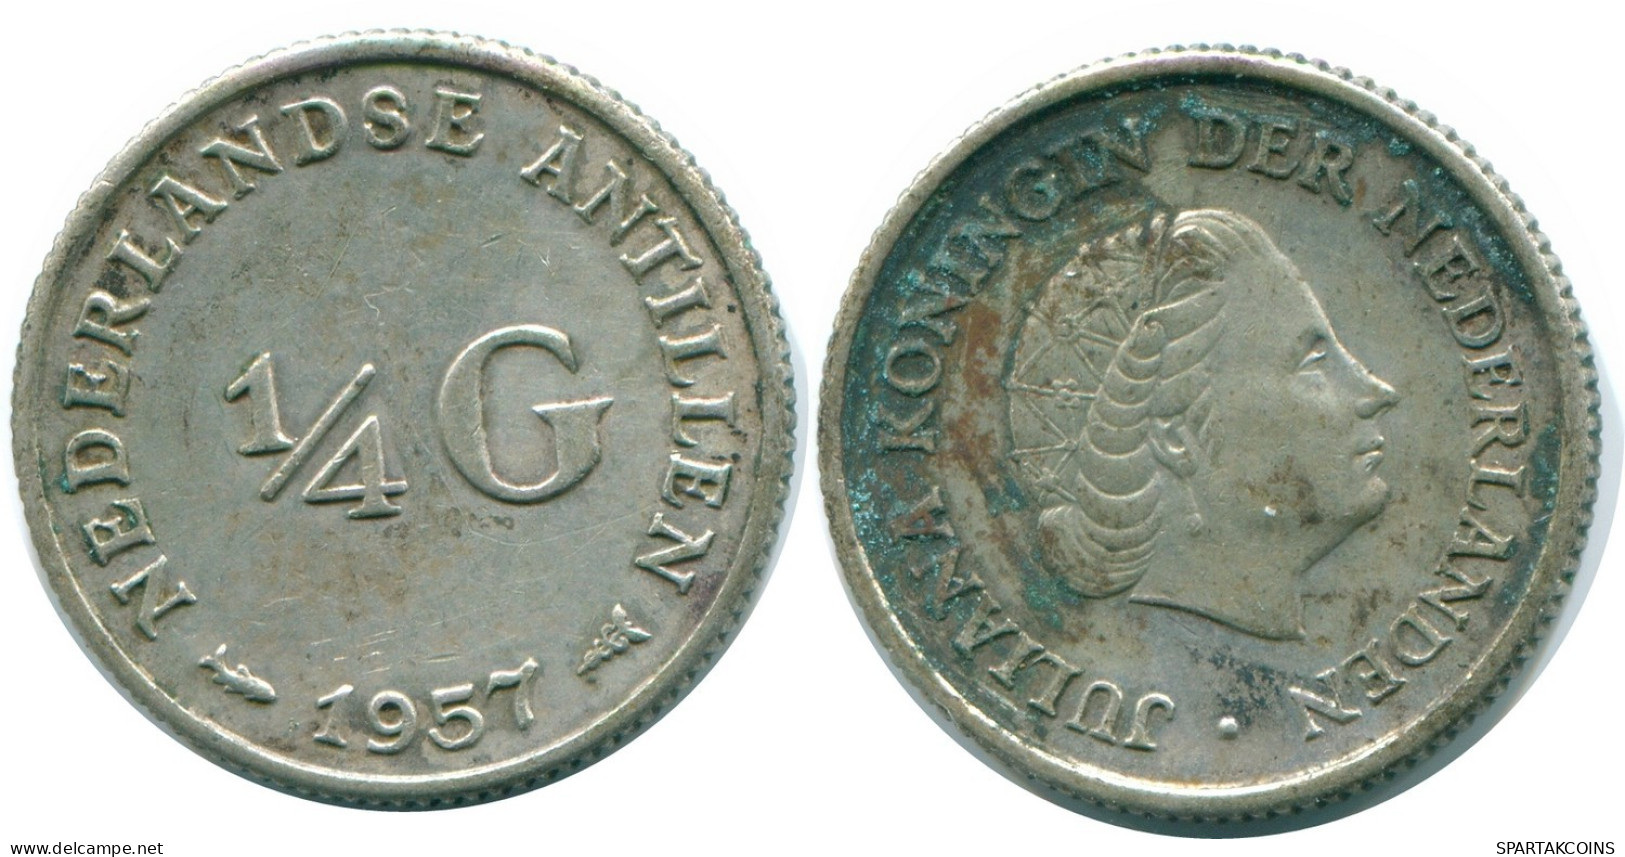 1/4 GULDEN 1957 NETHERLANDS ANTILLES SILVER Colonial Coin #NL10993.4.U.A - Netherlands Antilles